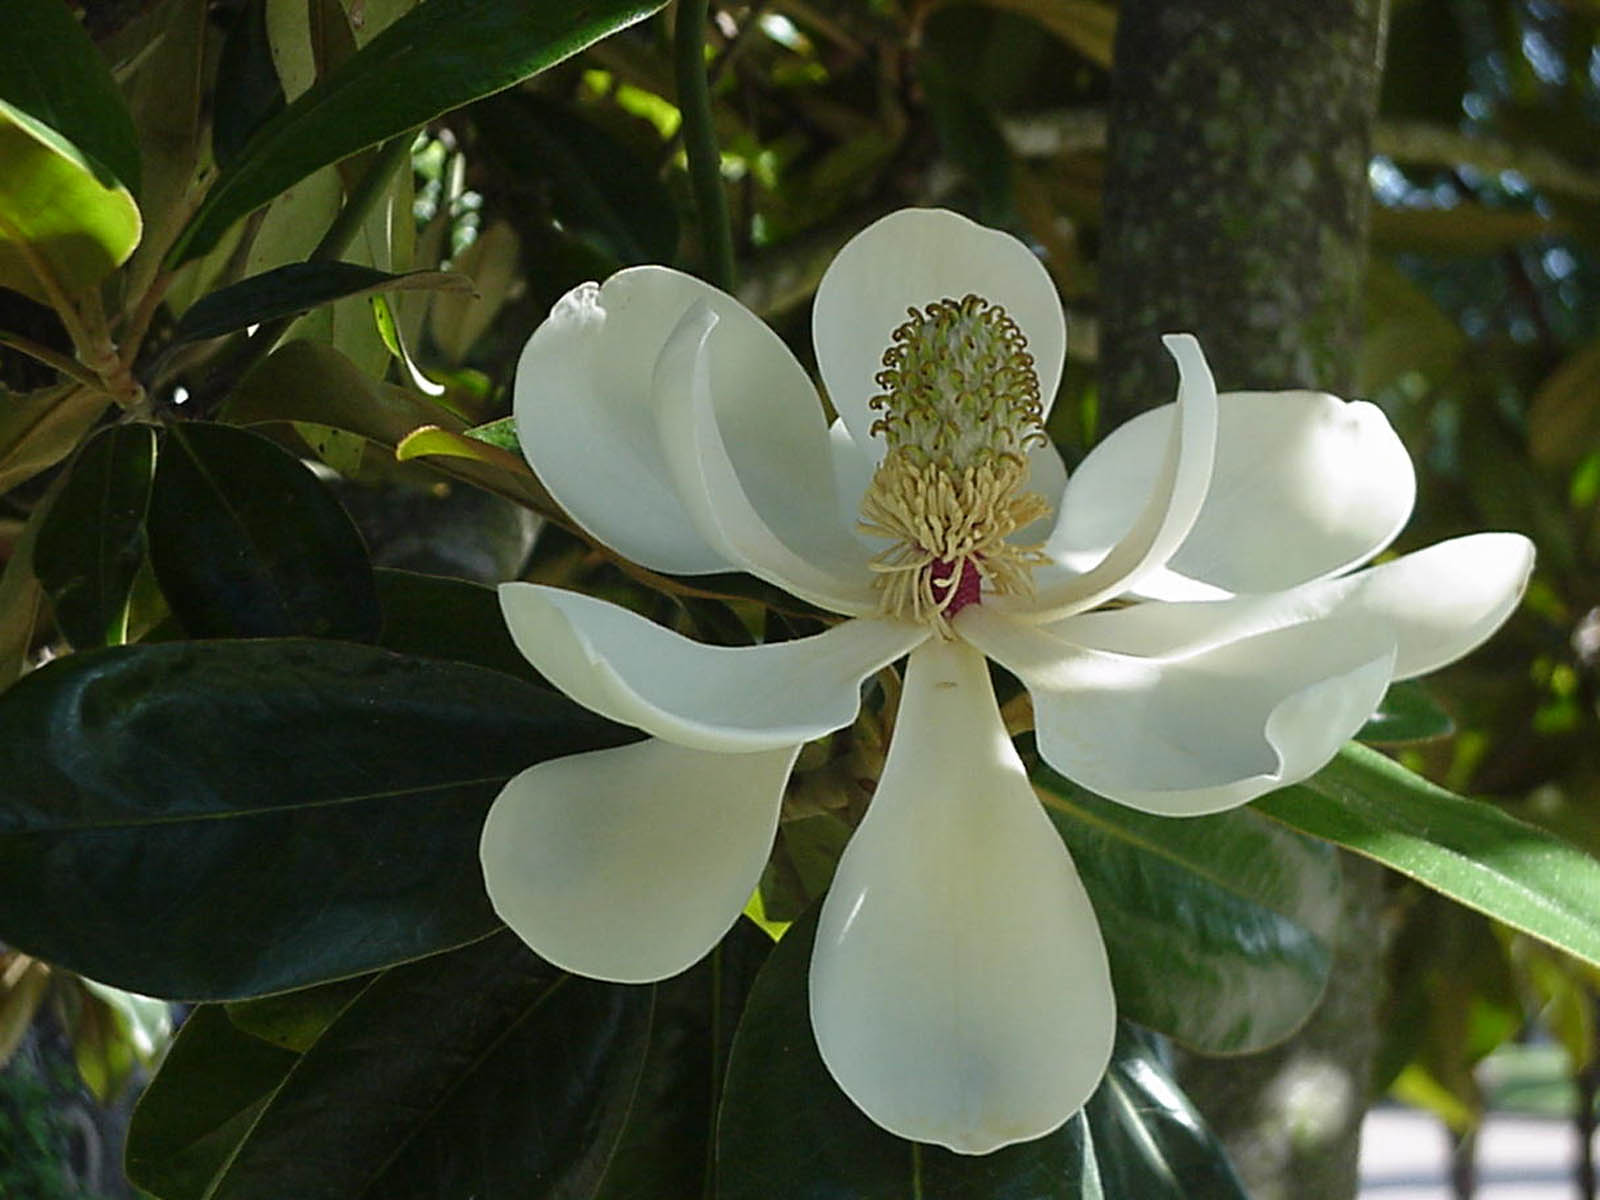 The Magnolia Blossom Wallpaper Desktop